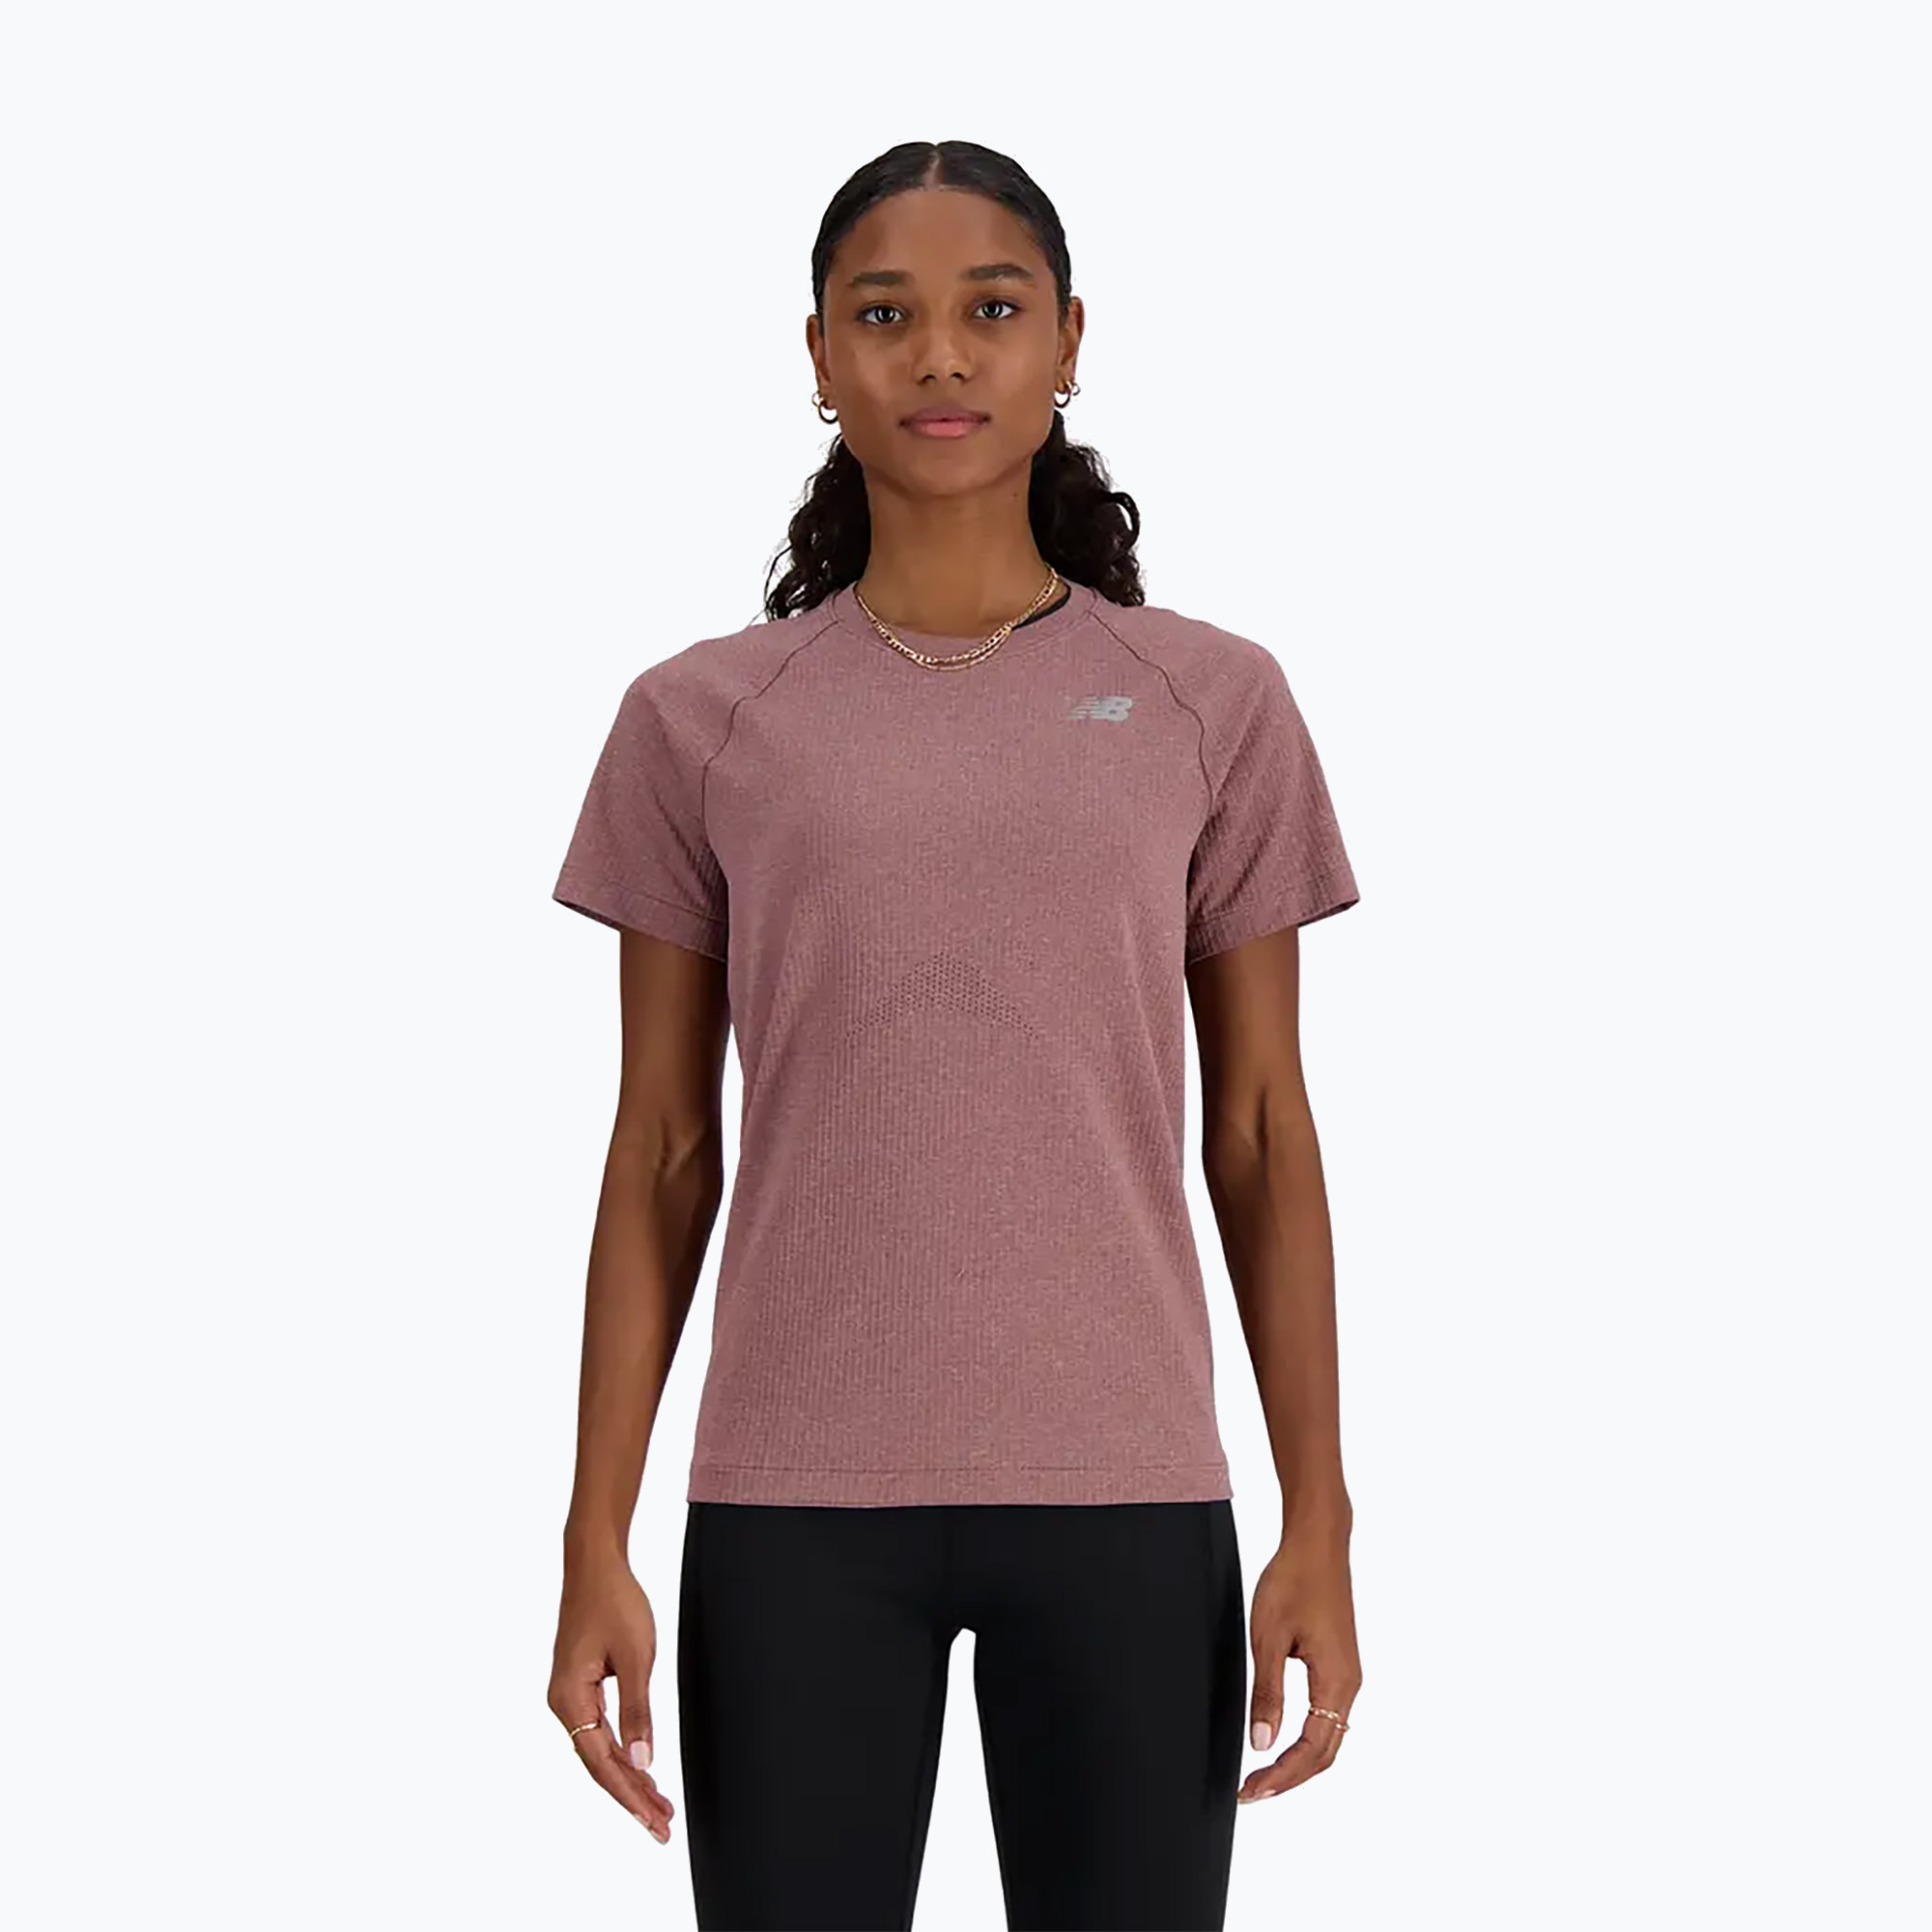 New Balance дамска тениска Seamless licorice heather